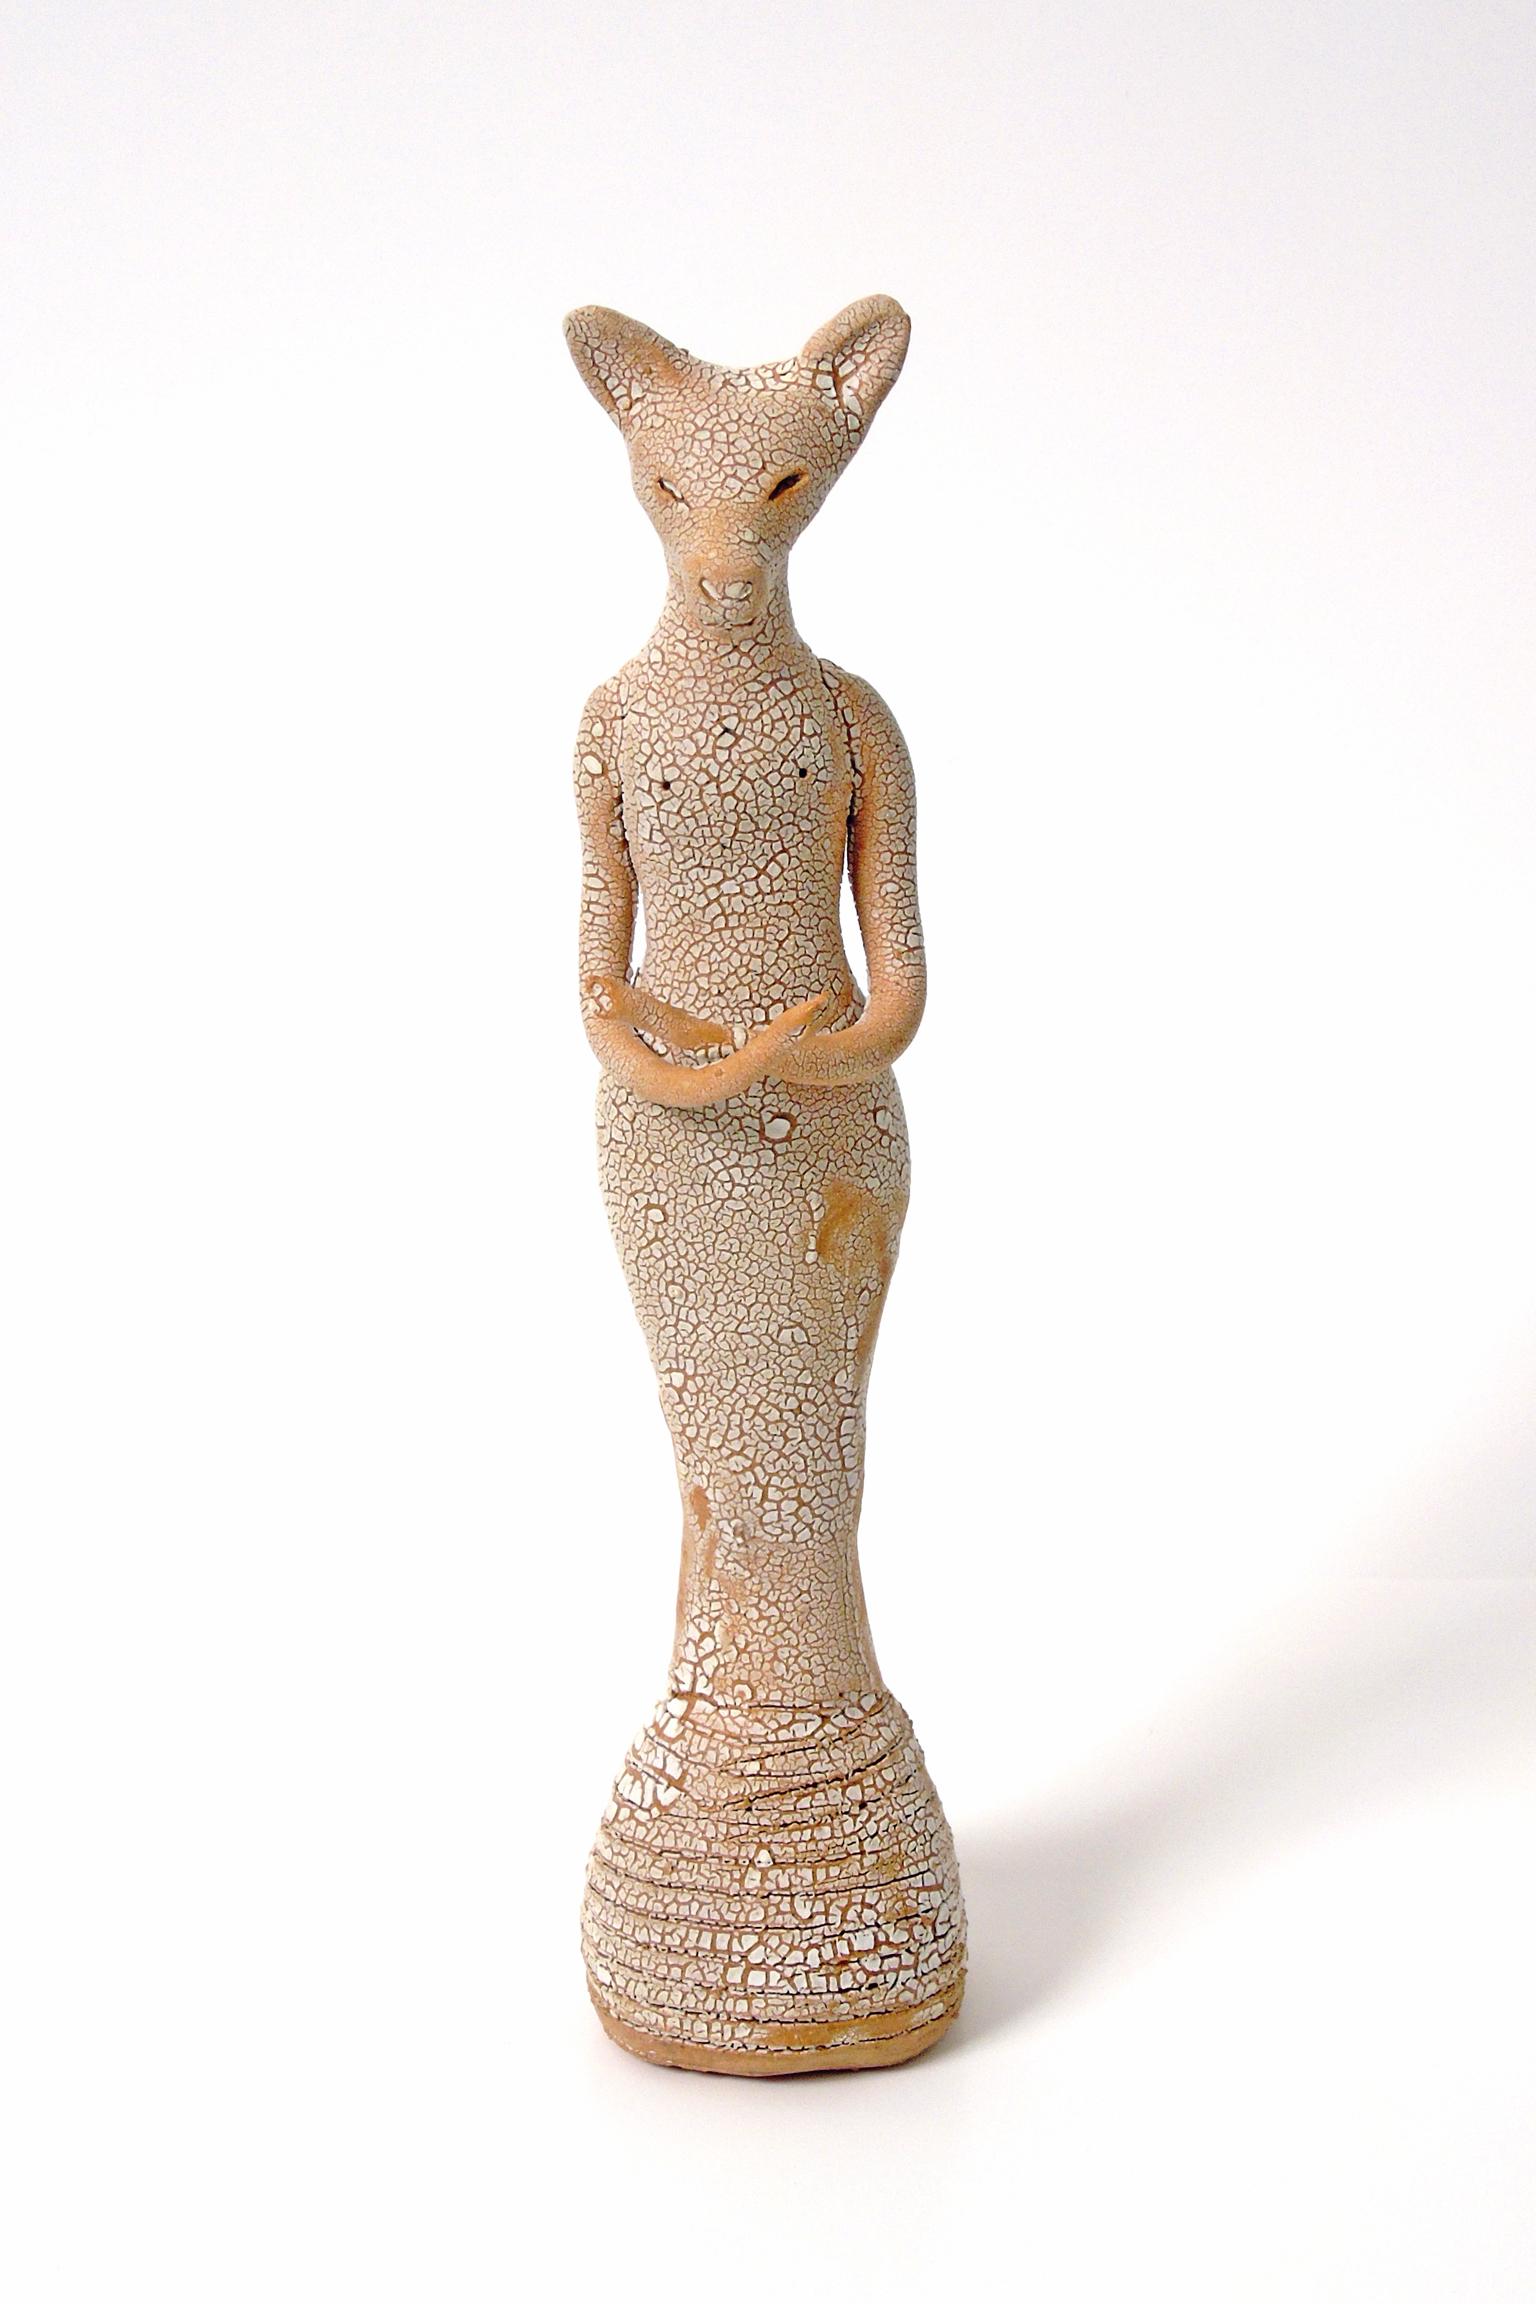 Robin Whiteman Figurative Sculpture - Tiny Fox Totem -82